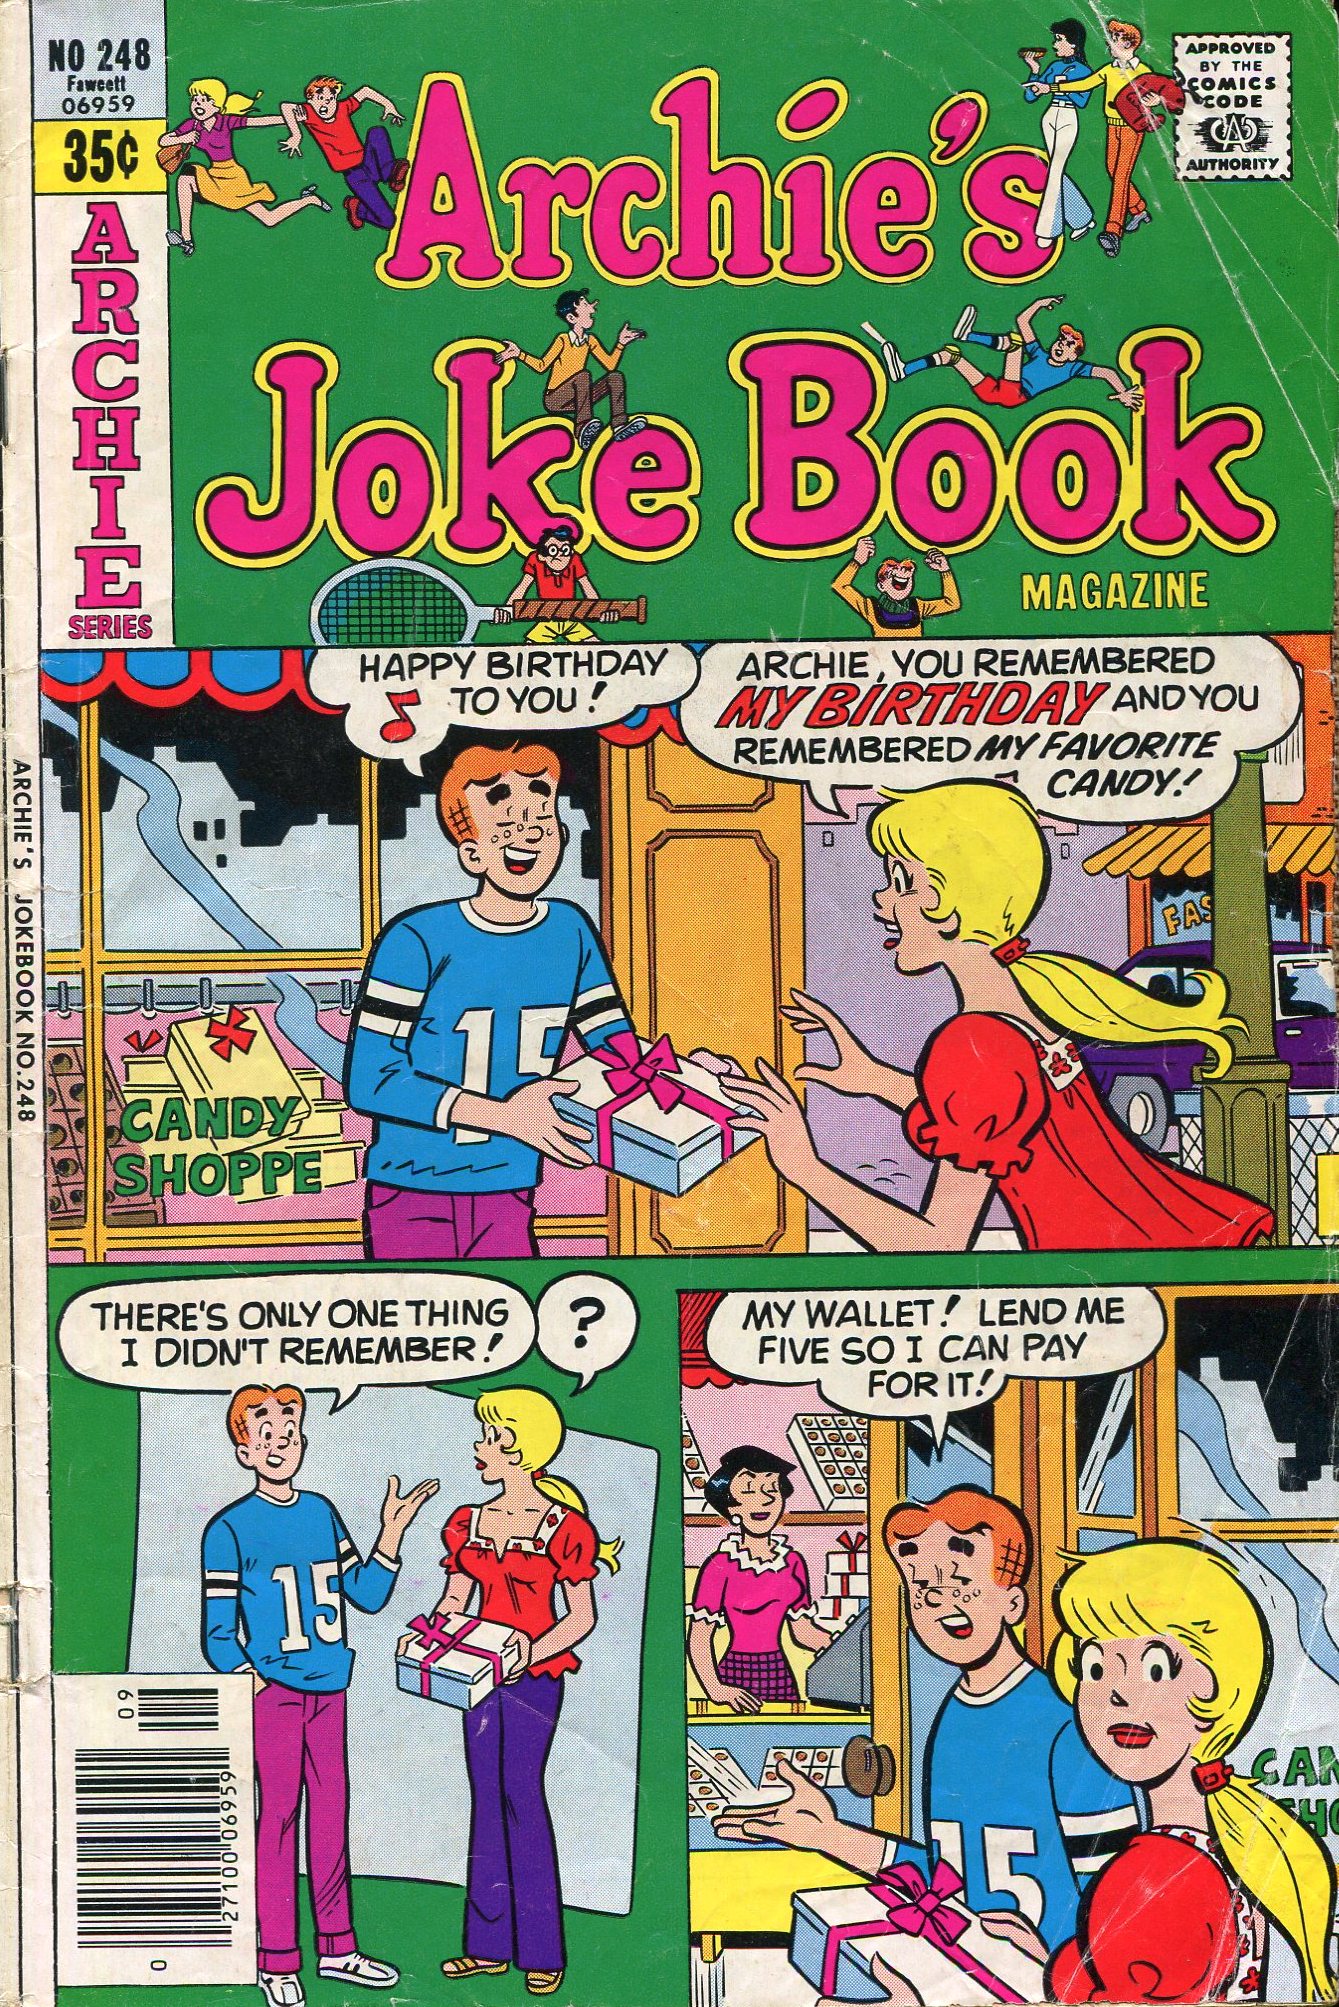 Read online Archie's Joke Book Magazine comic -  Issue #248 - 1